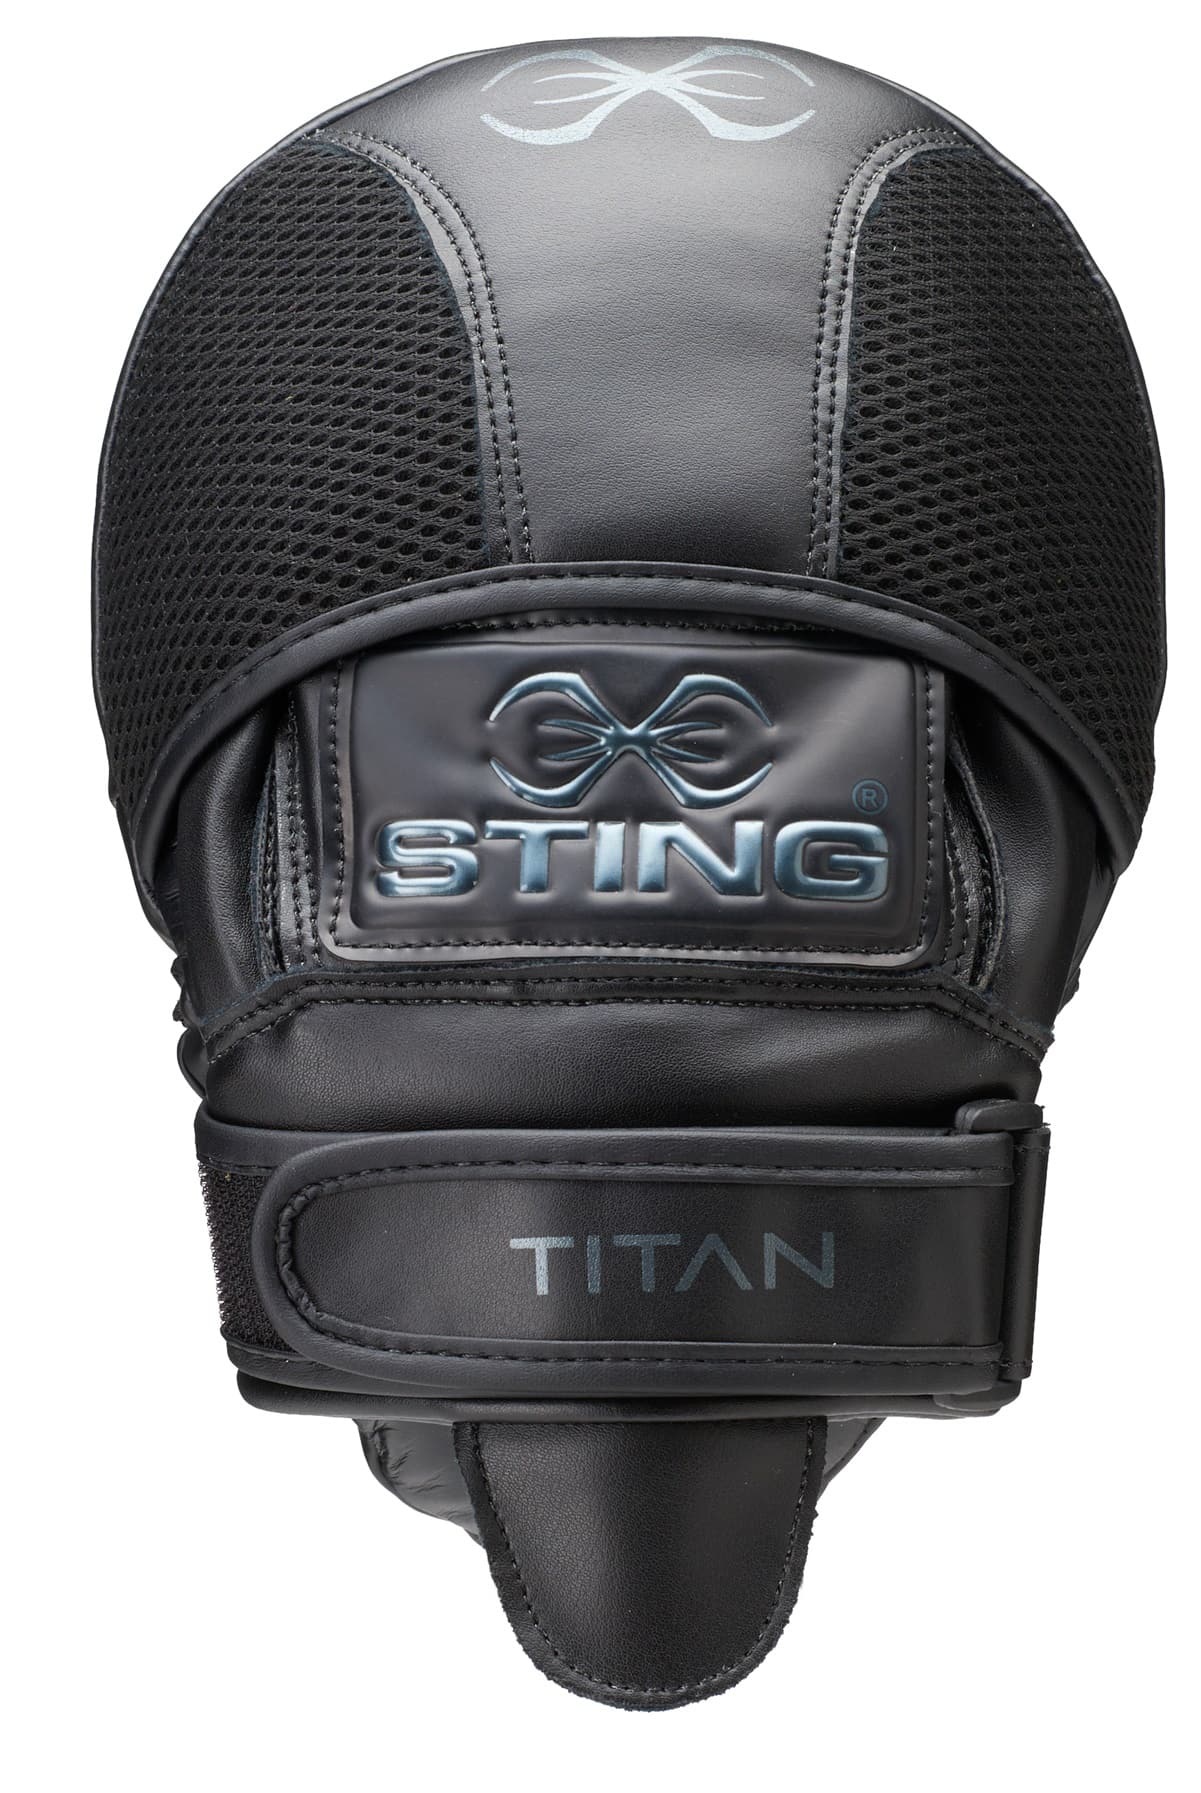 Sting Boxing Focus Mitts Titan Neo Gel Pads Black 